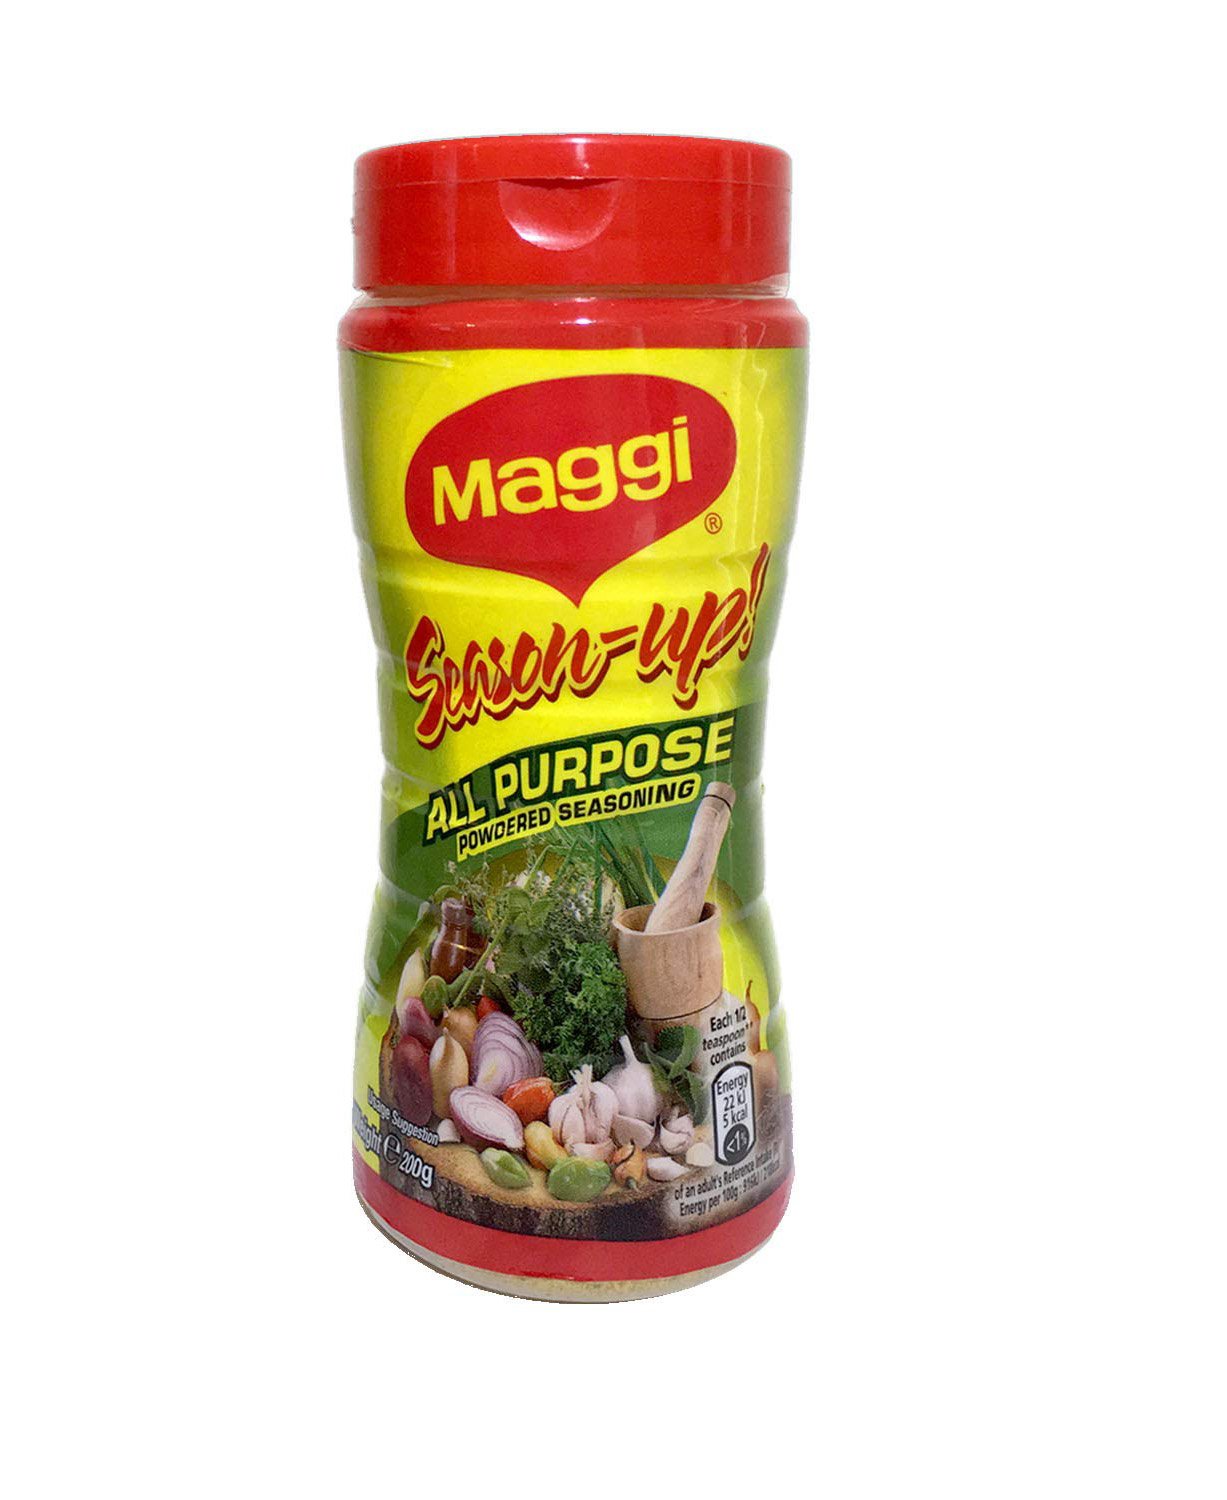 Maggi Season-Up All Purpose 200g Box of 24